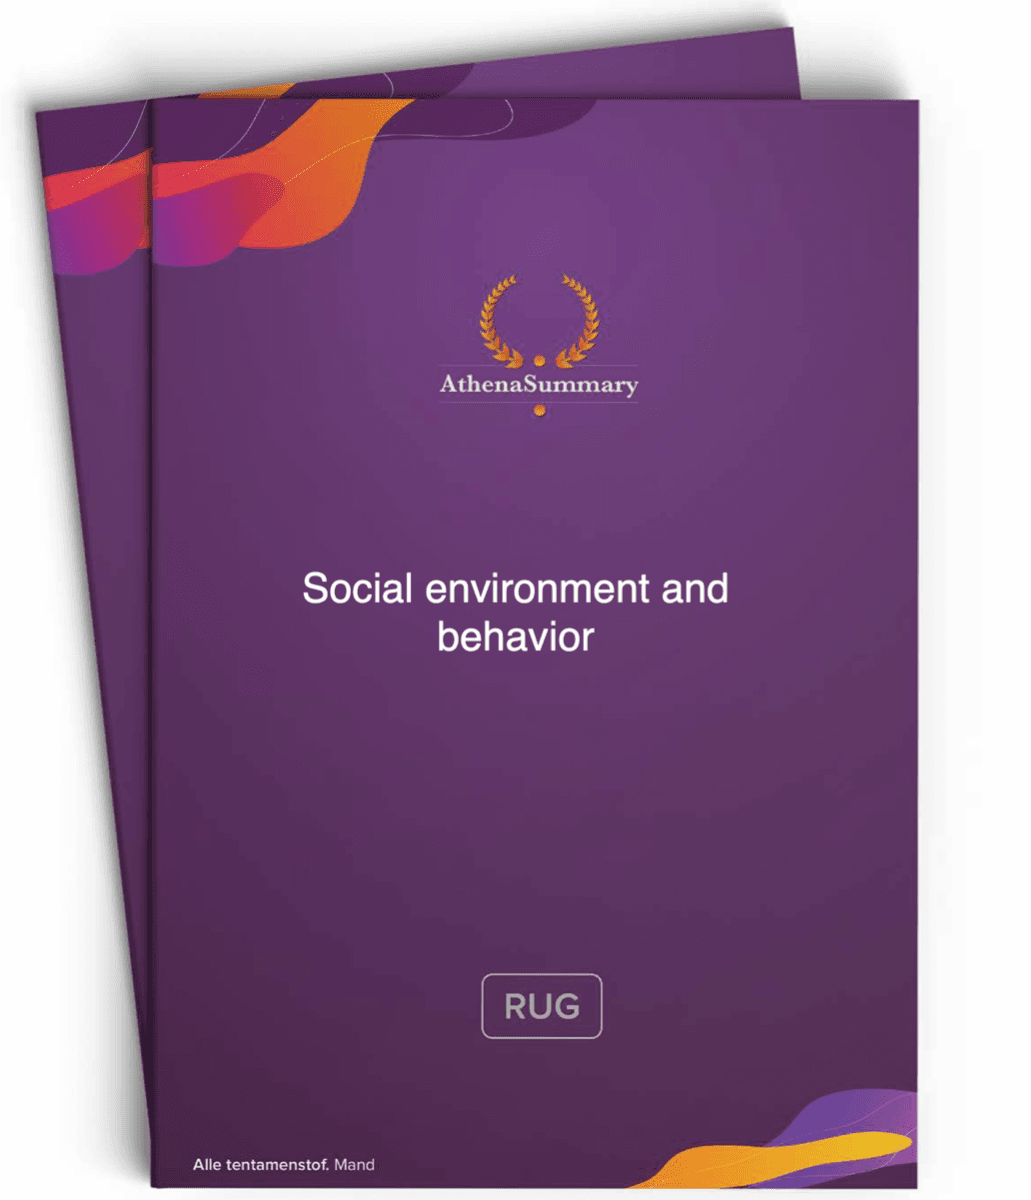 Literature summary - Social environment and behavior